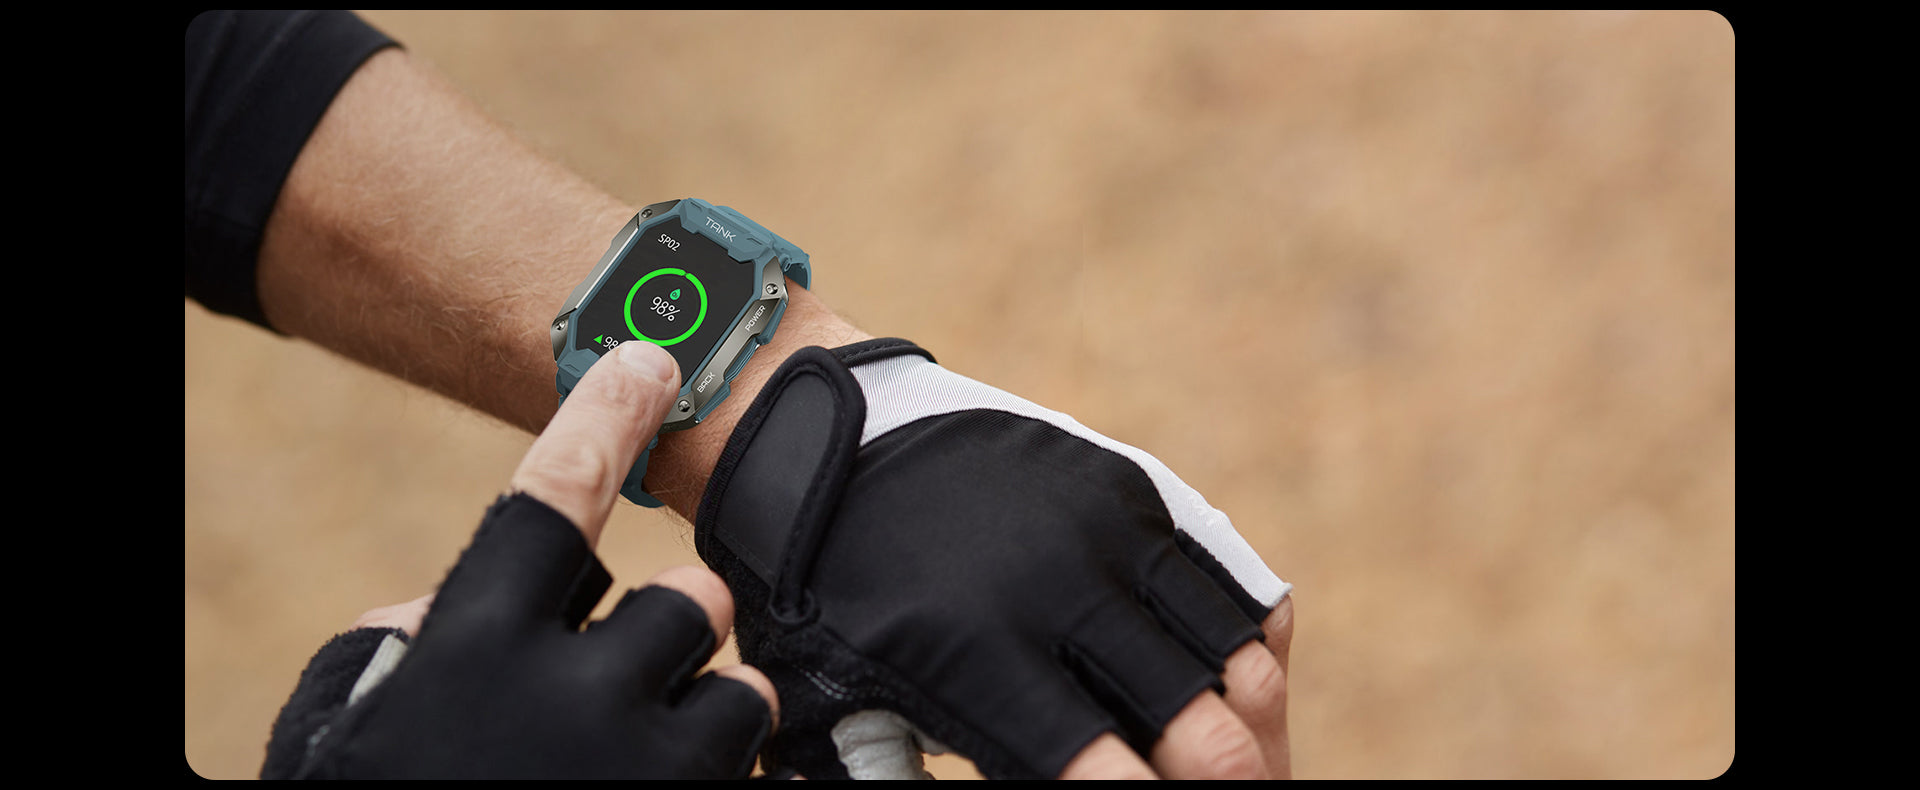 KOSPET TANK M1 PRO Smartwatch support Blood Oxygen Monitoring